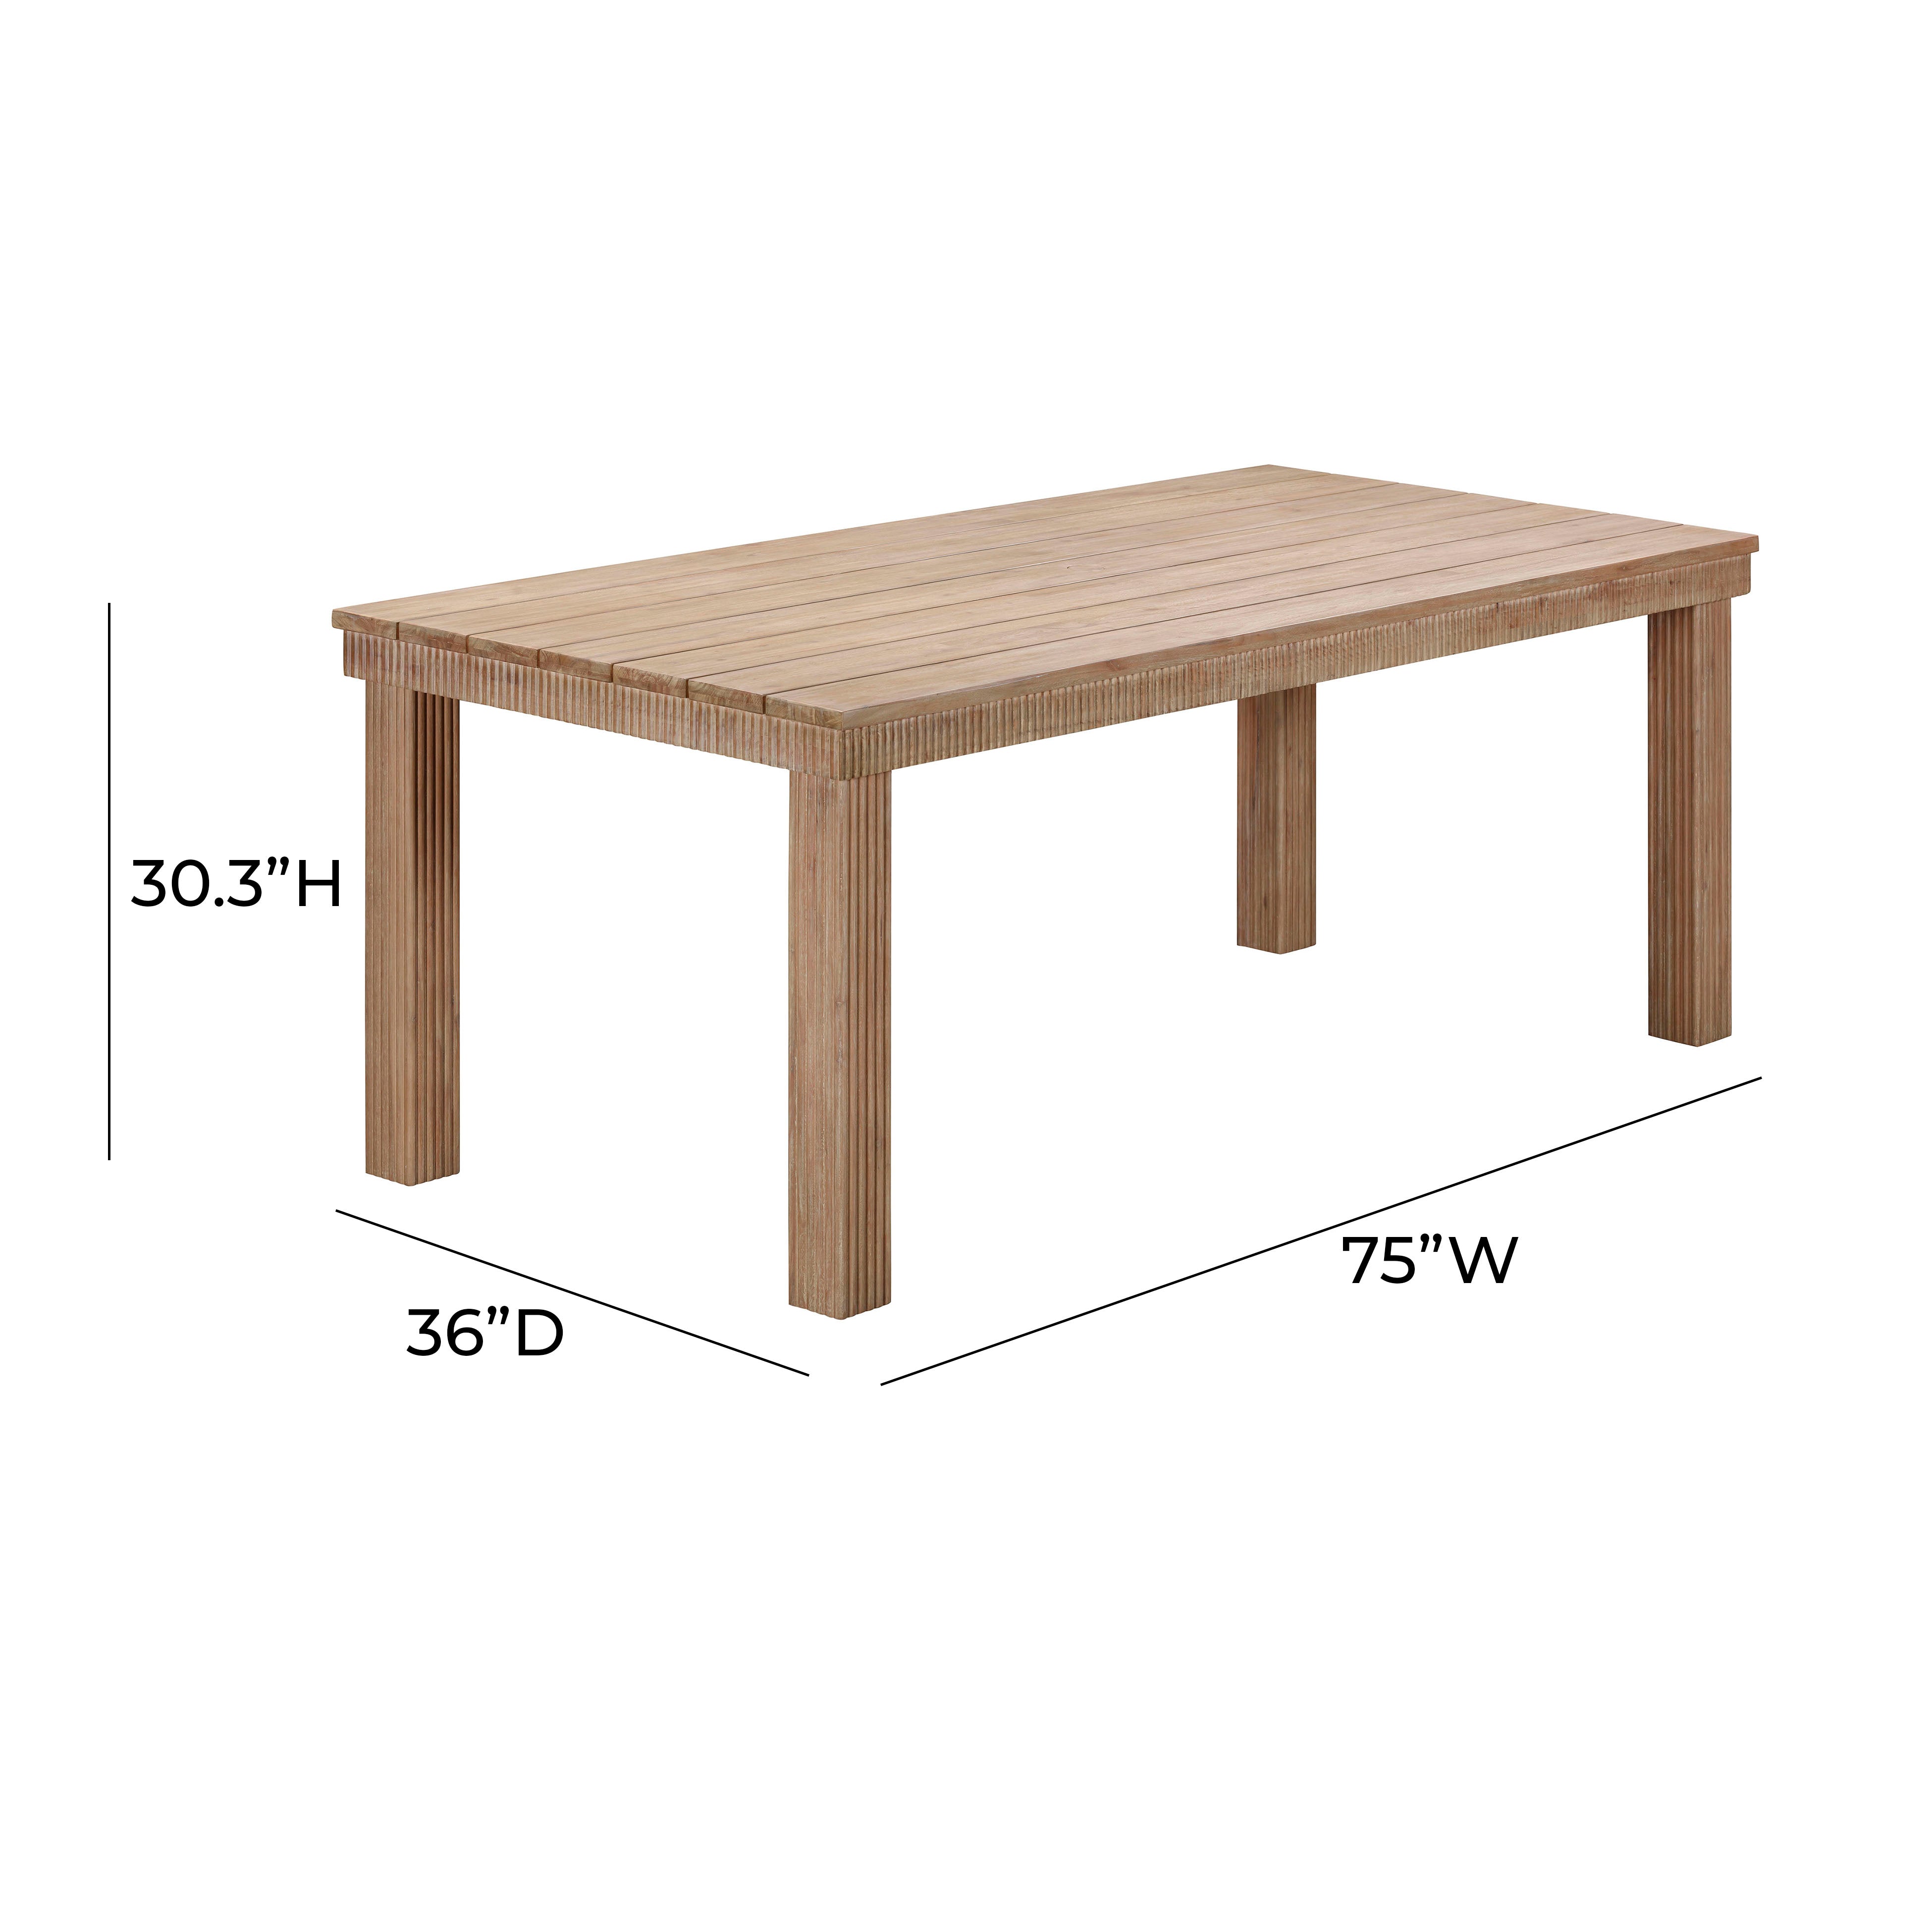 Mesa de comedor rectangular de 75” para exteriores Evodie dimensiones.